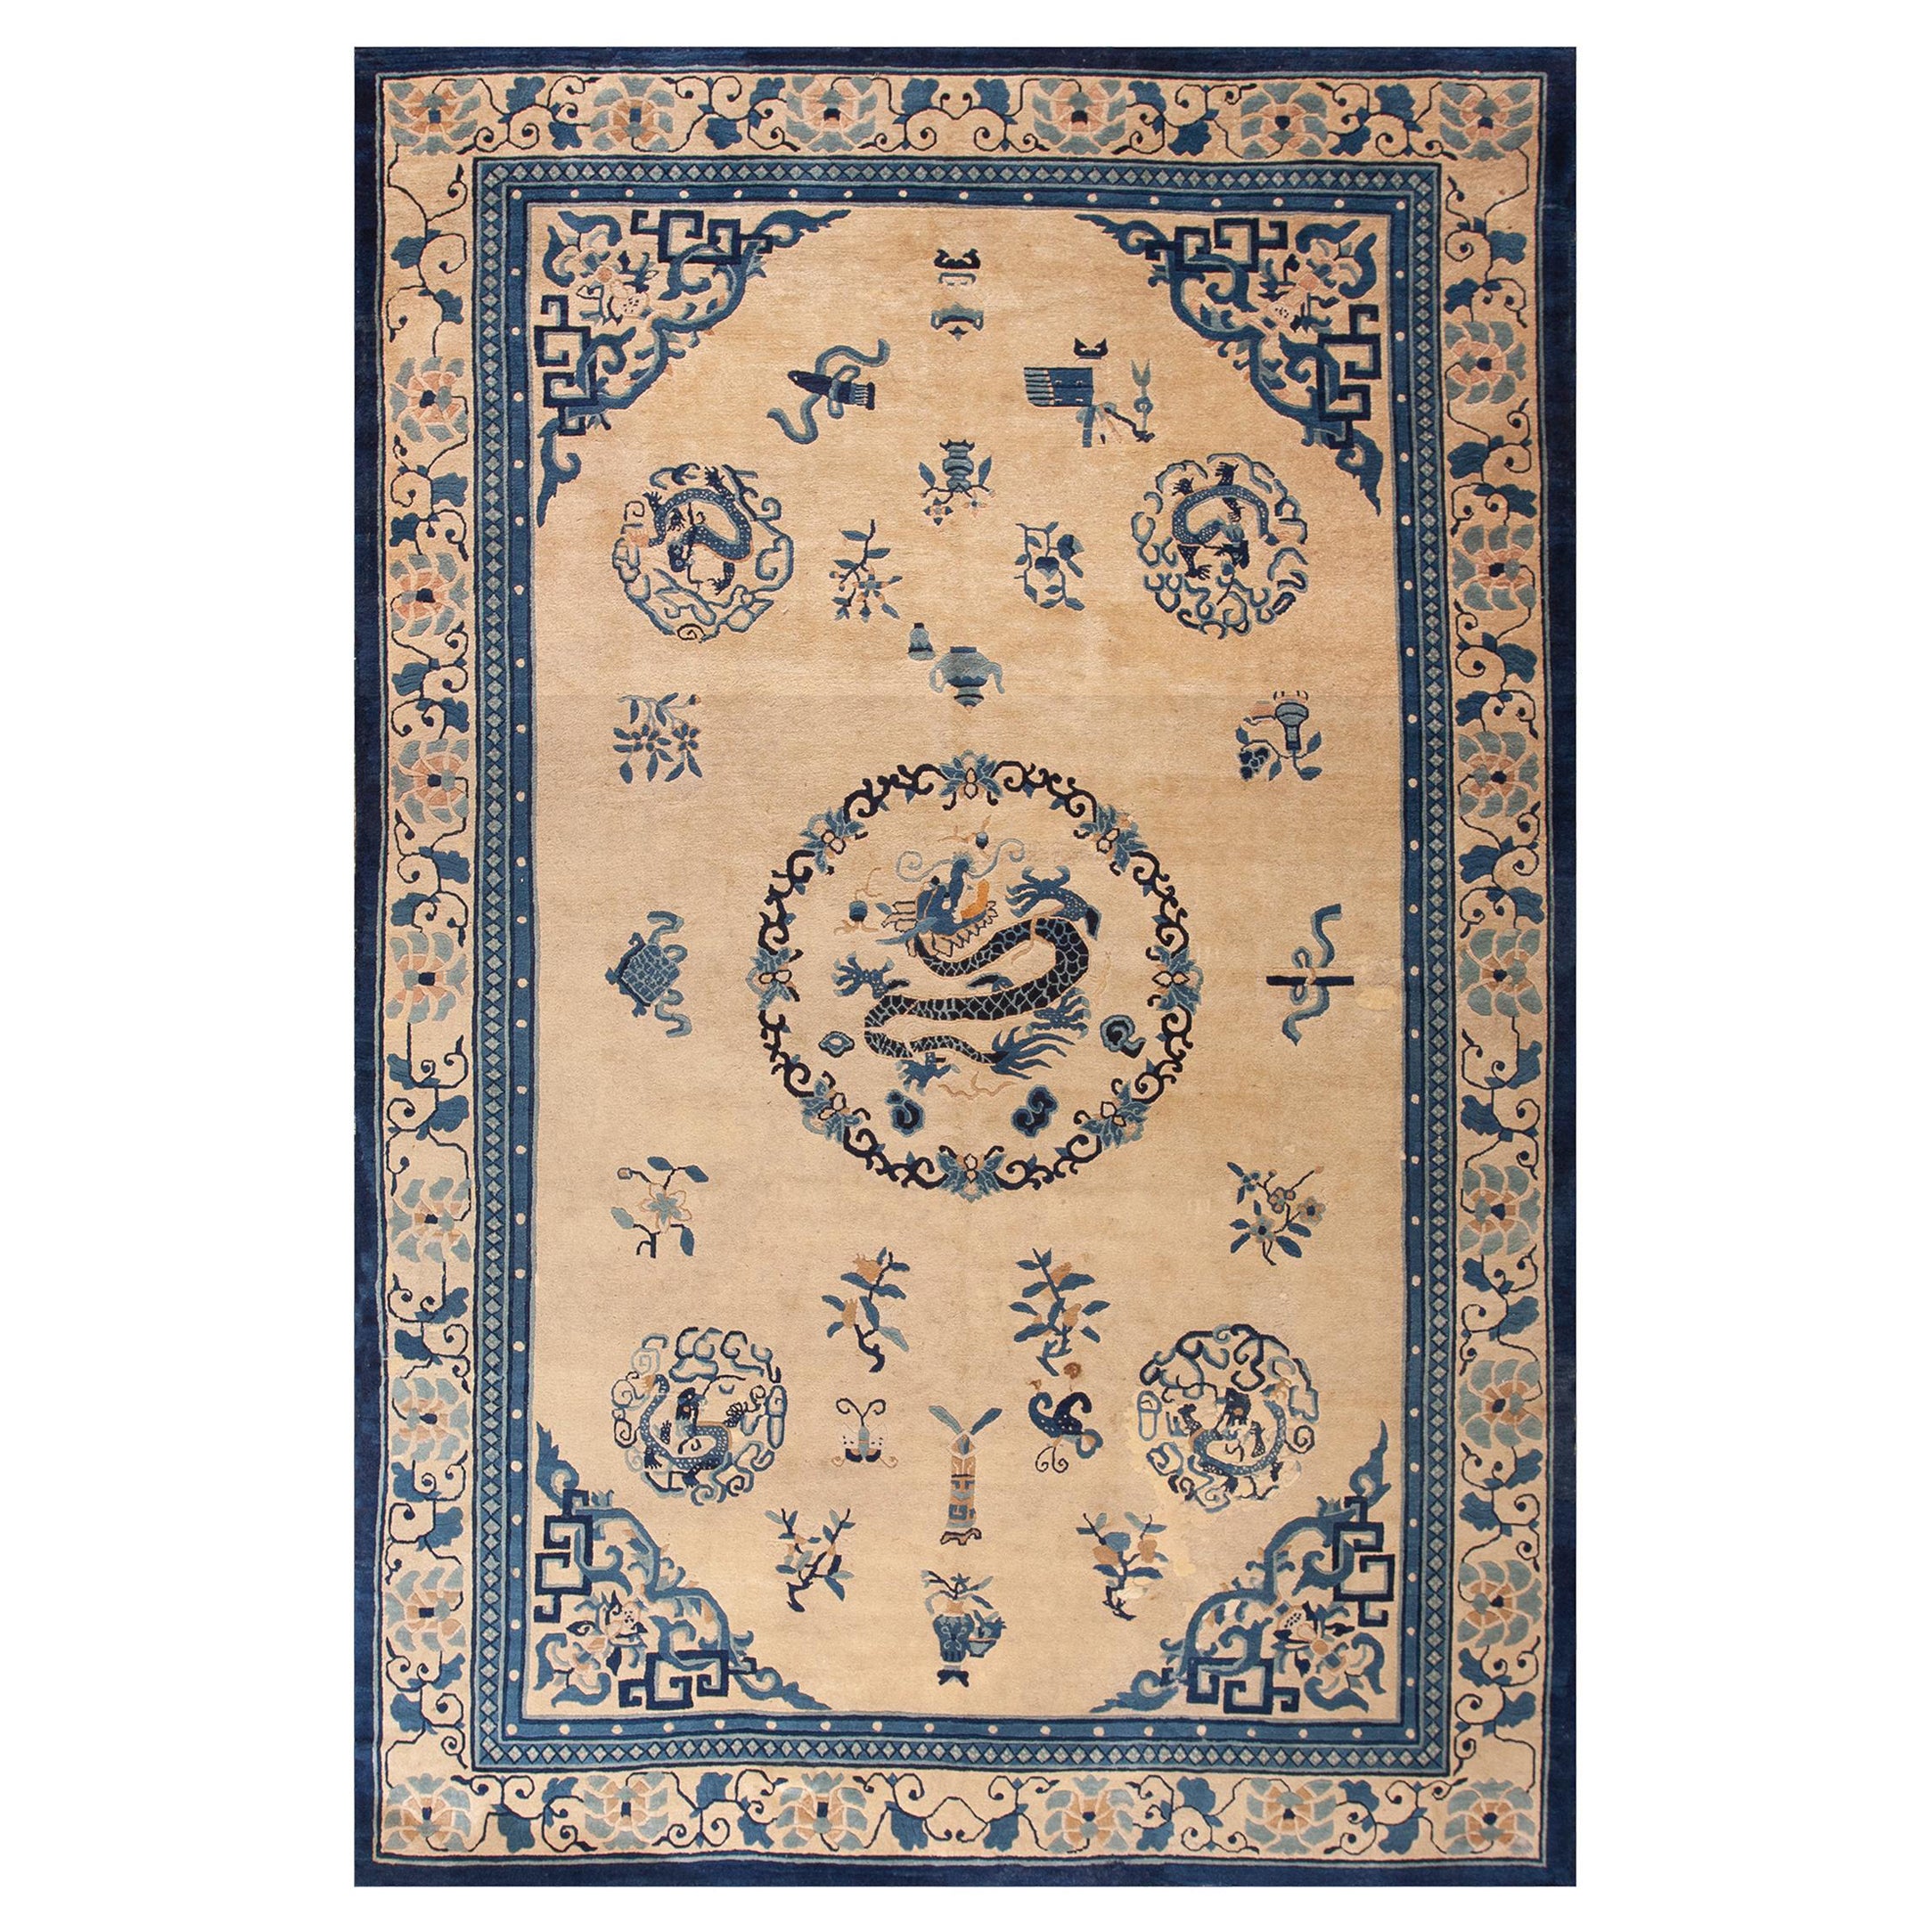 Late 19th Century Chinese Peking Dragon Carpet ( 8' x 12' - 245 x 365 )